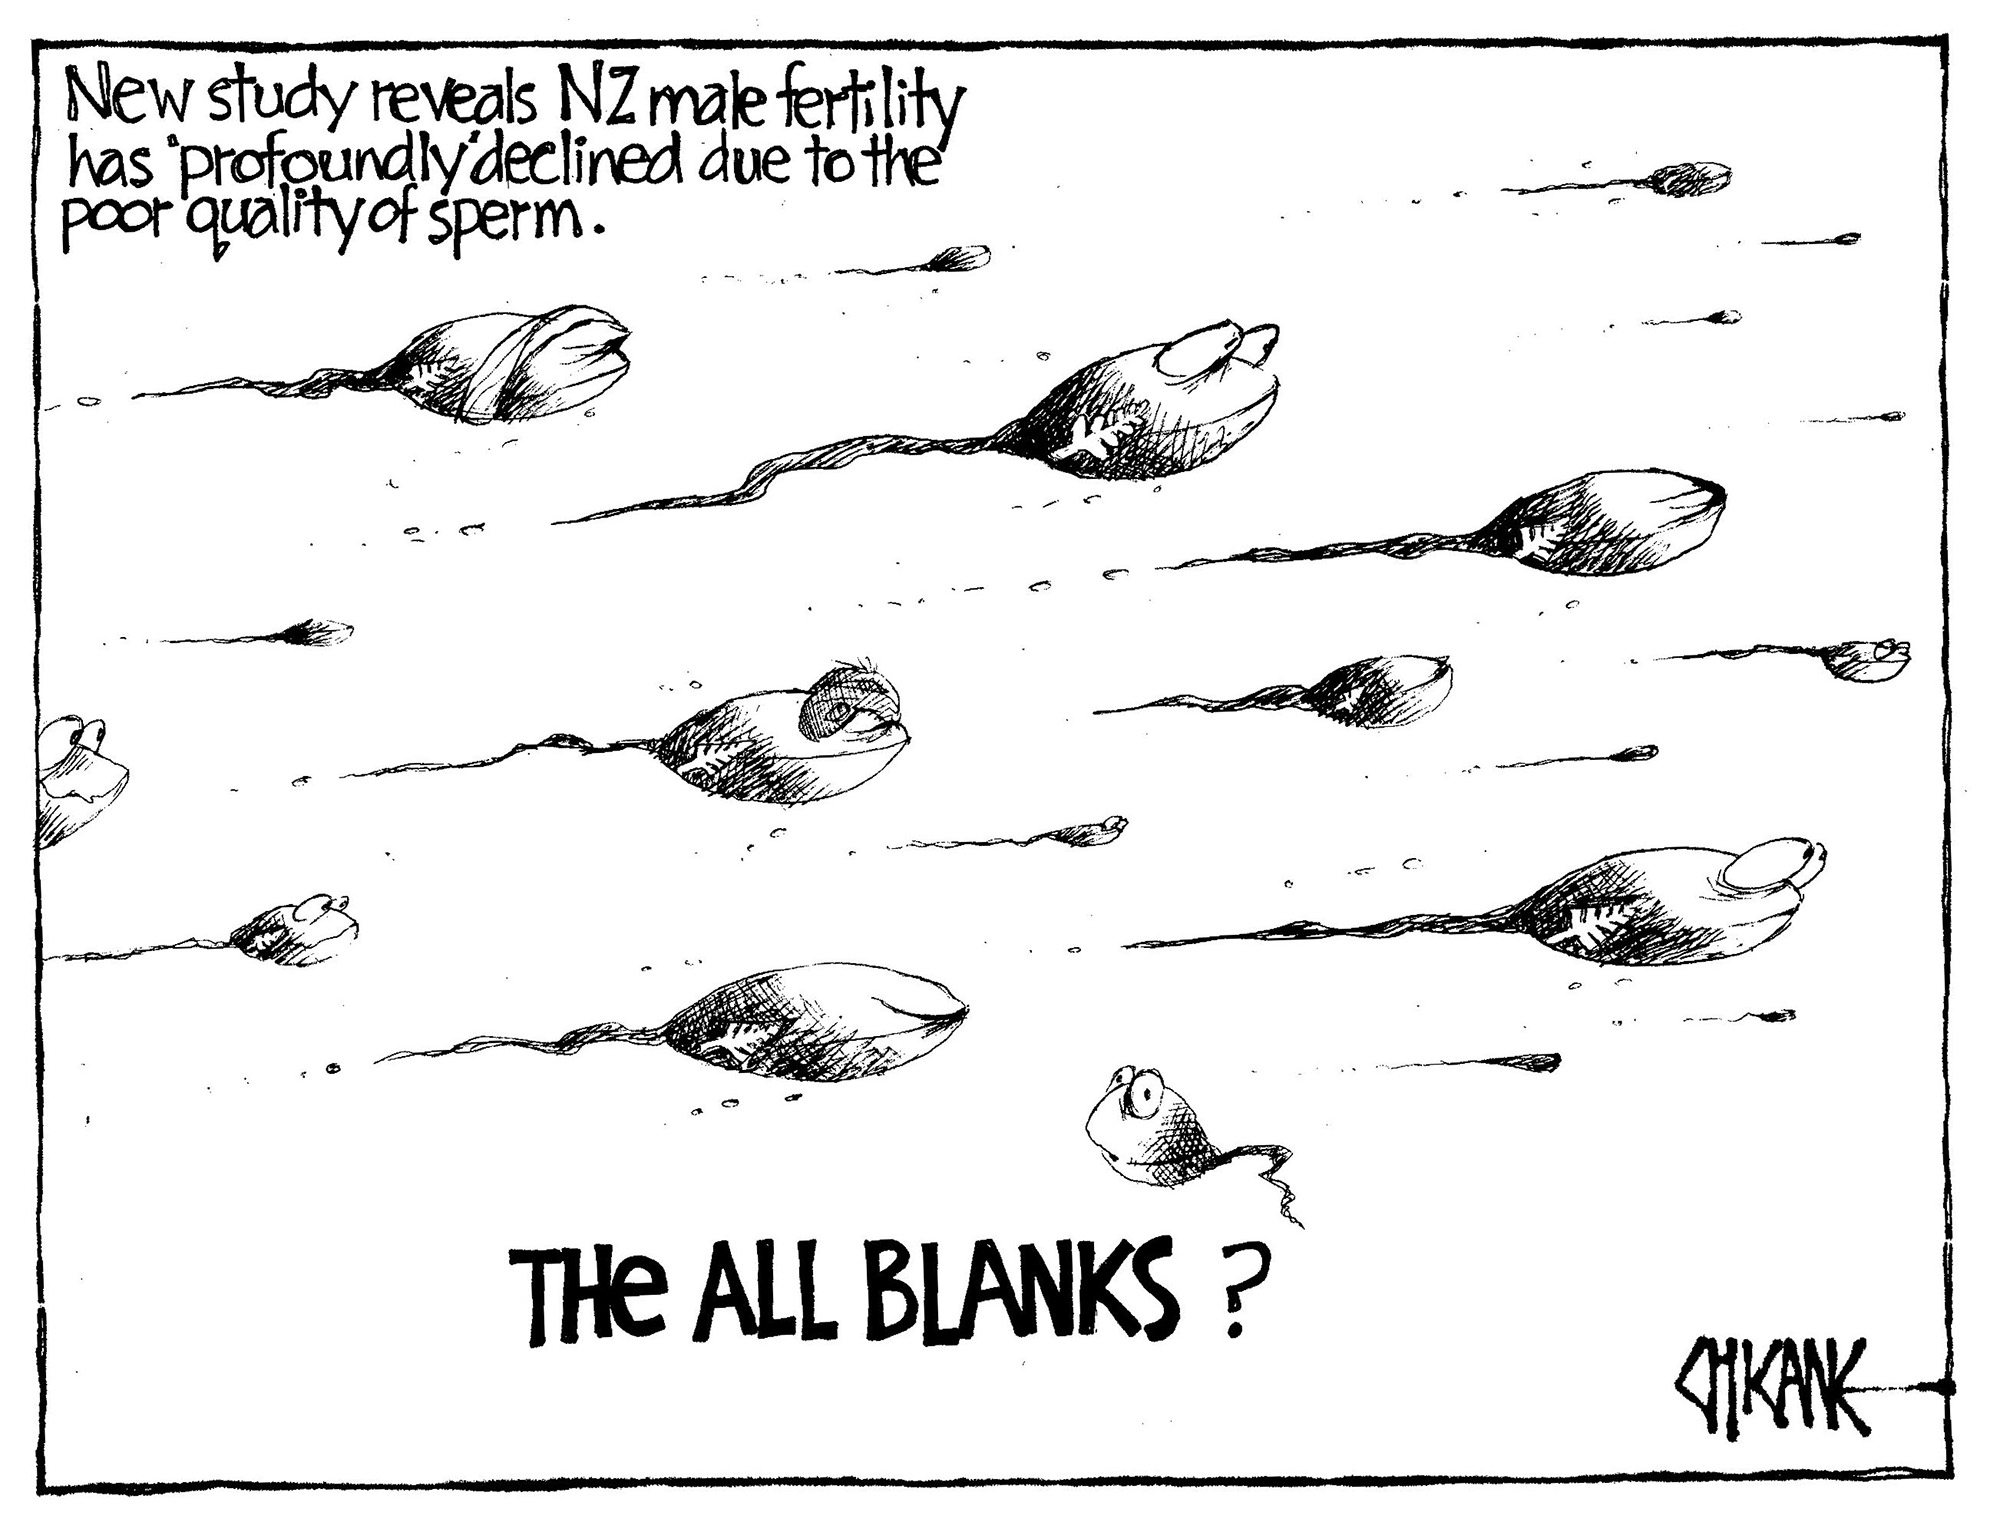 New Zealand male fertility study. Cartoon by Chicane